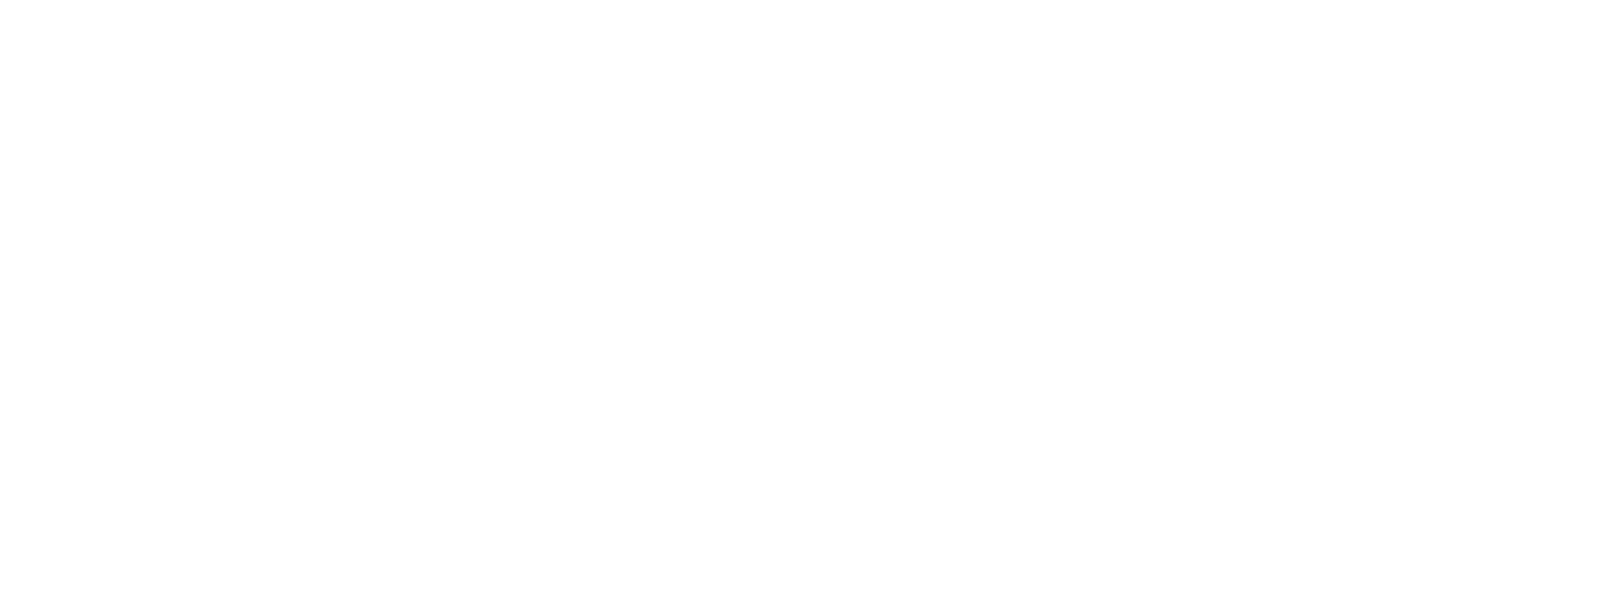 Tellurian logo large for dark backgrounds (transparent PNG)